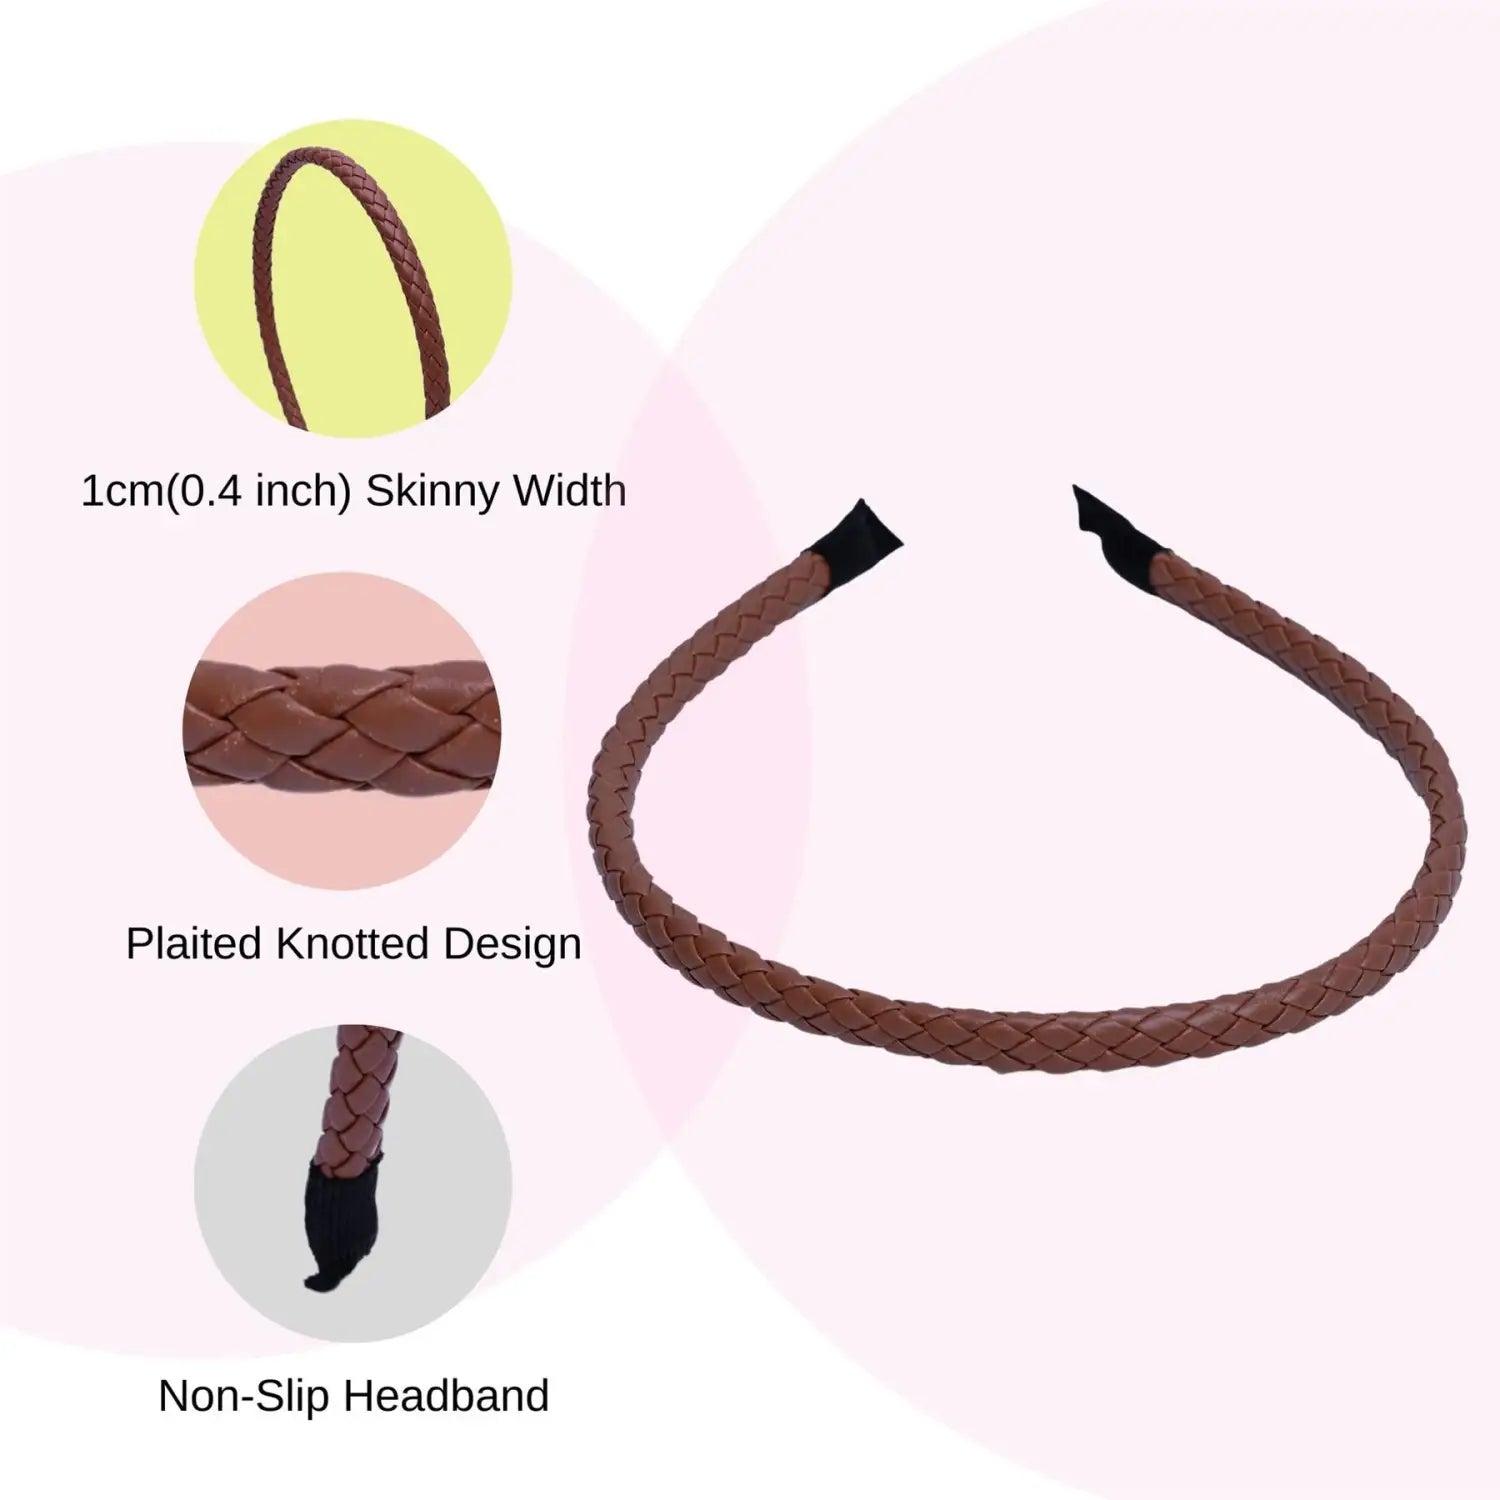 Braided PU Leather Skinny Headband with Basic Sense